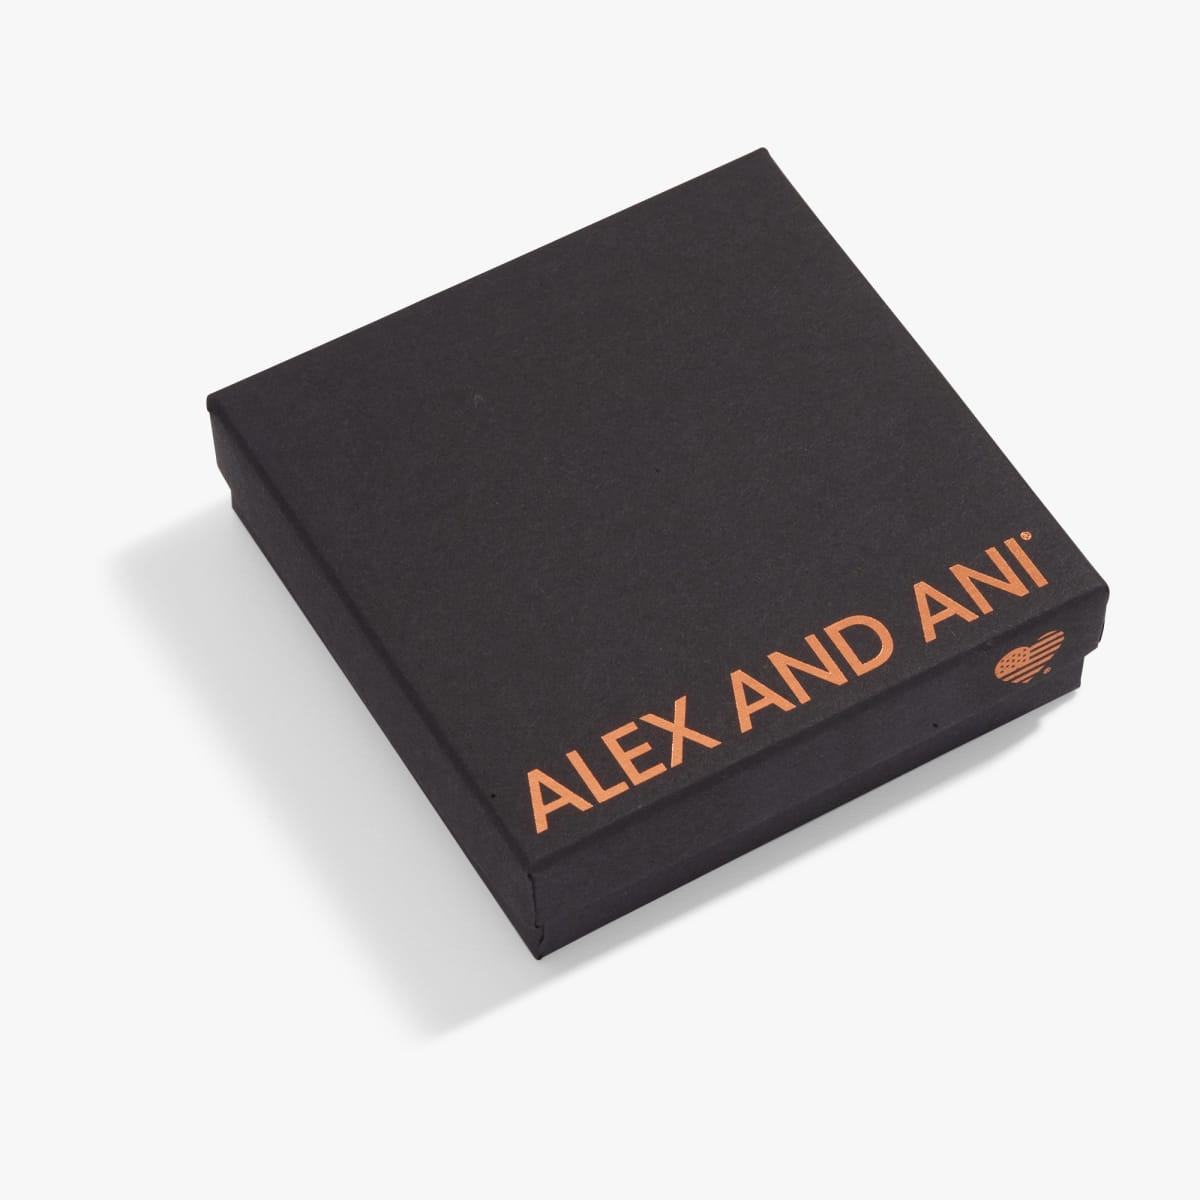 Jewelry Polishing Cloth - Alex and Ani